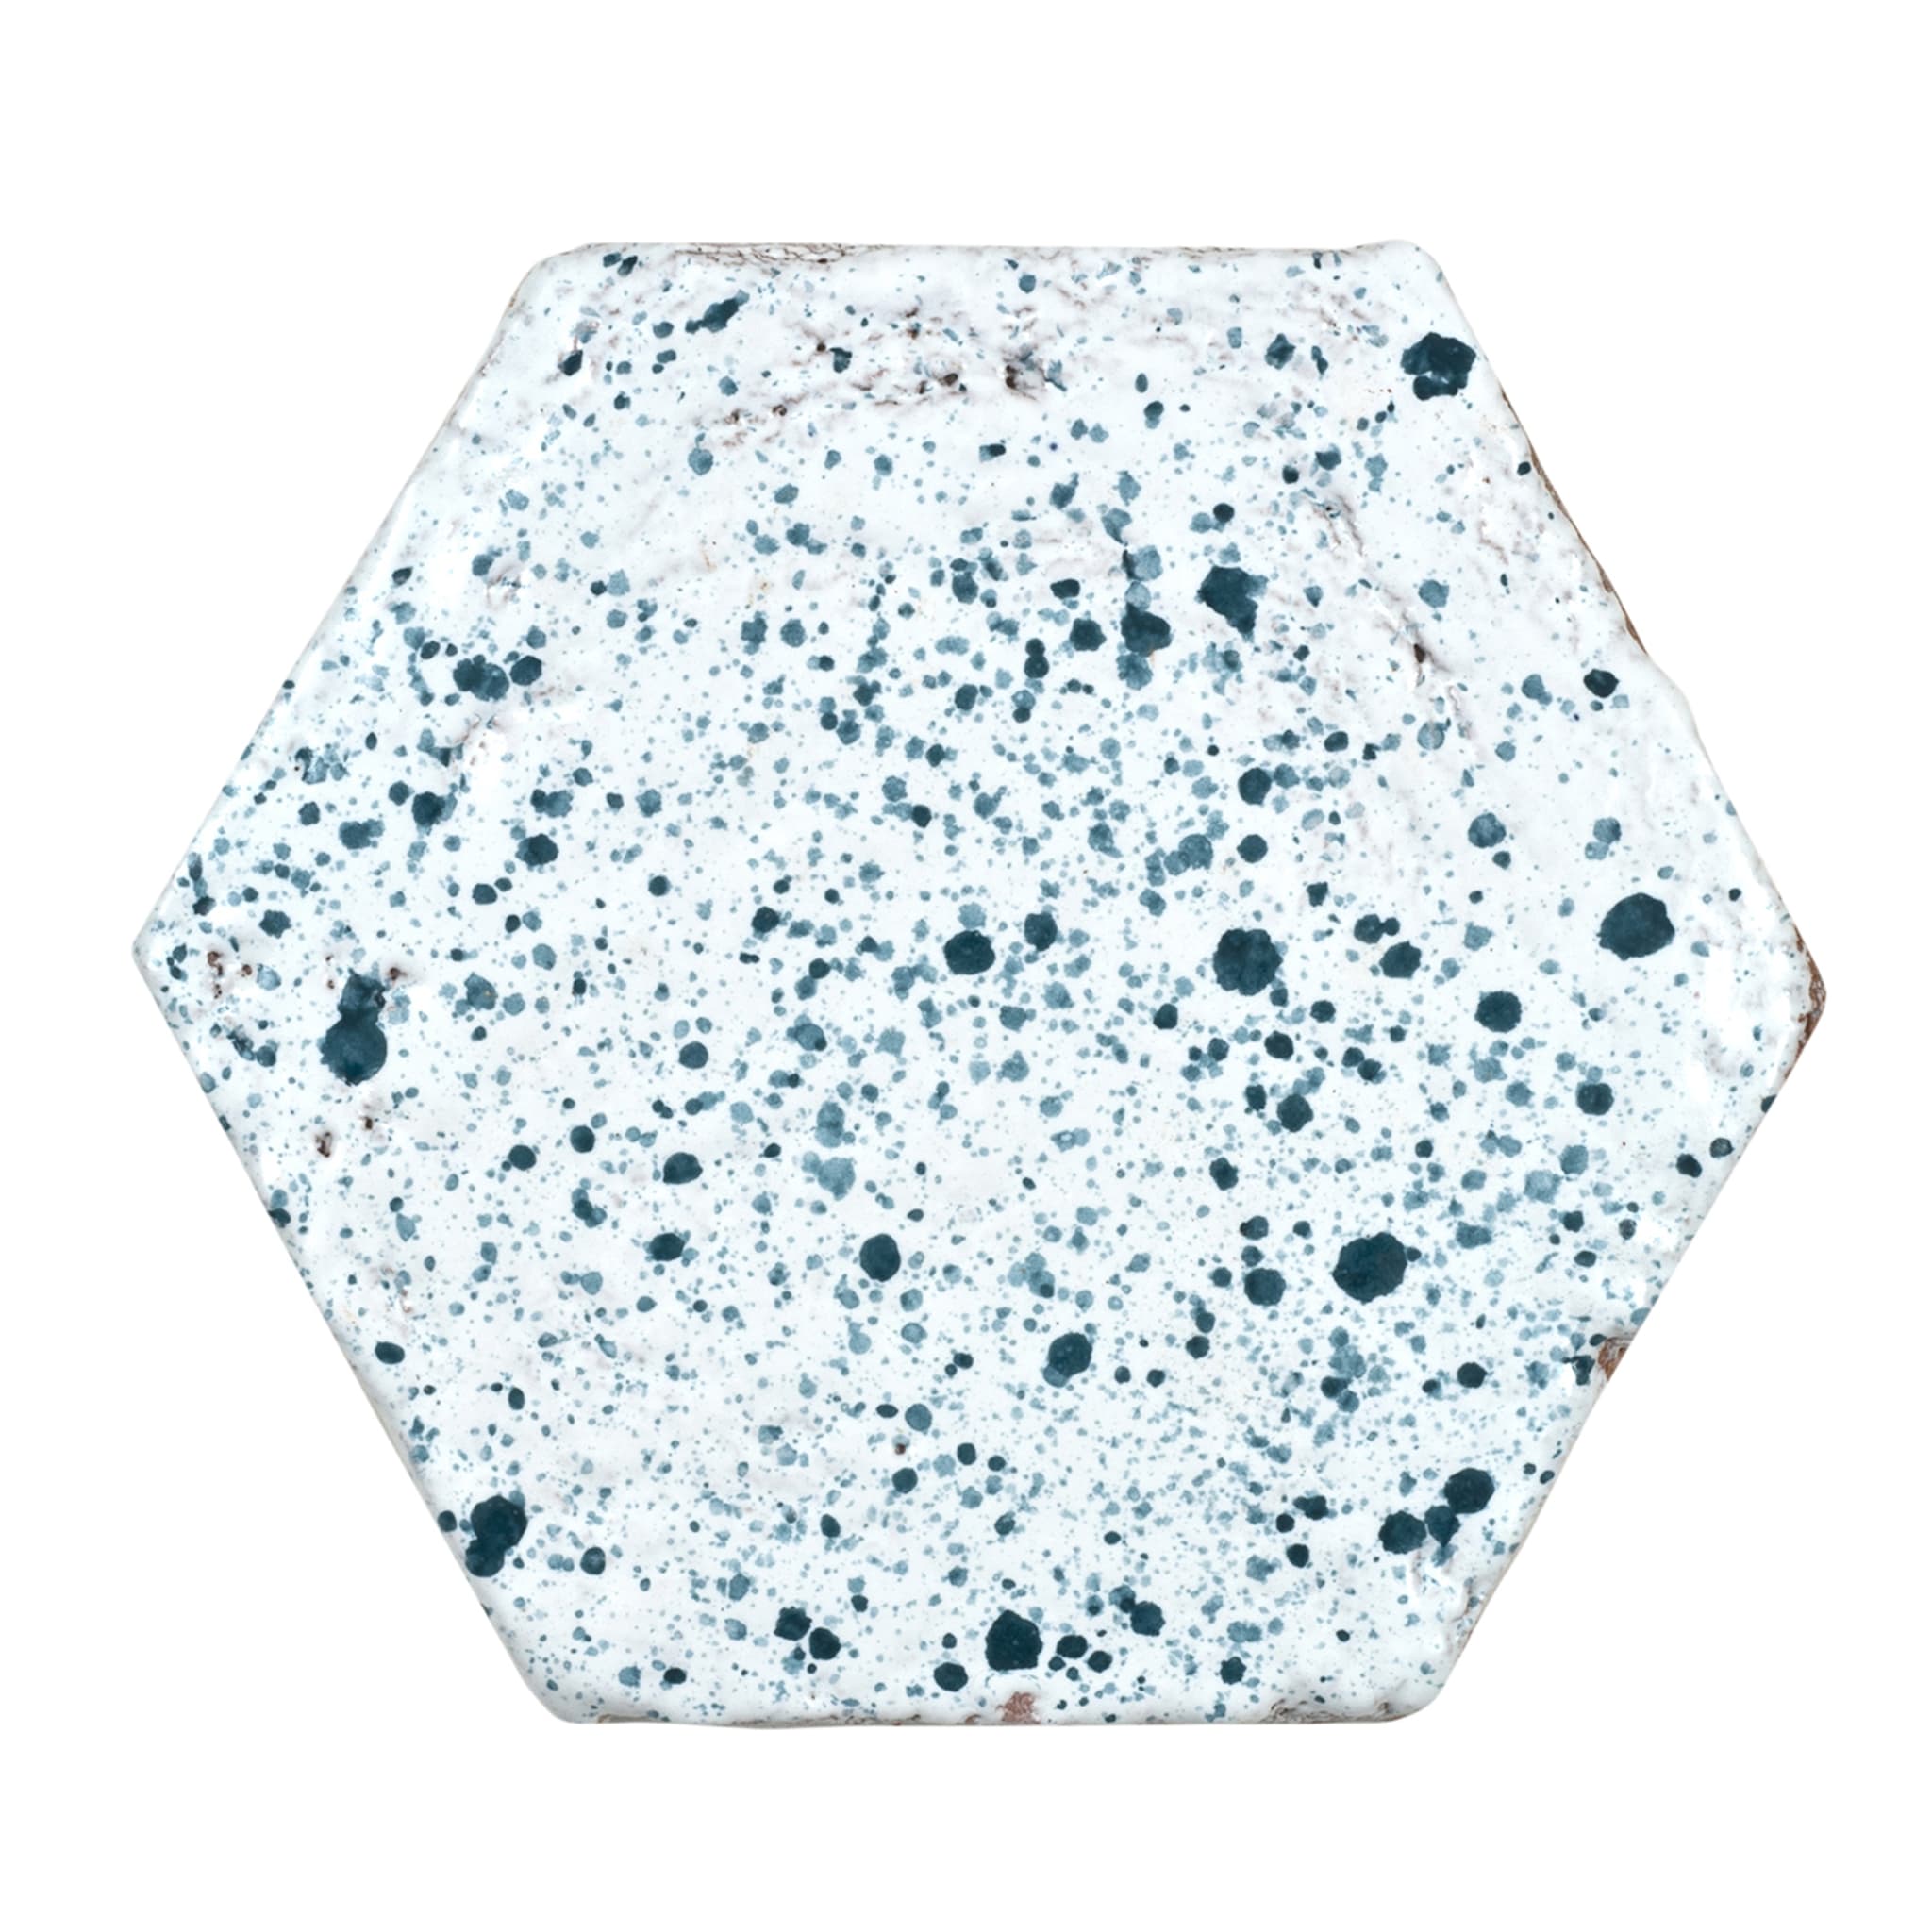 Schizzi Set of 25 Green & White Hexagonal Tiles - Main view